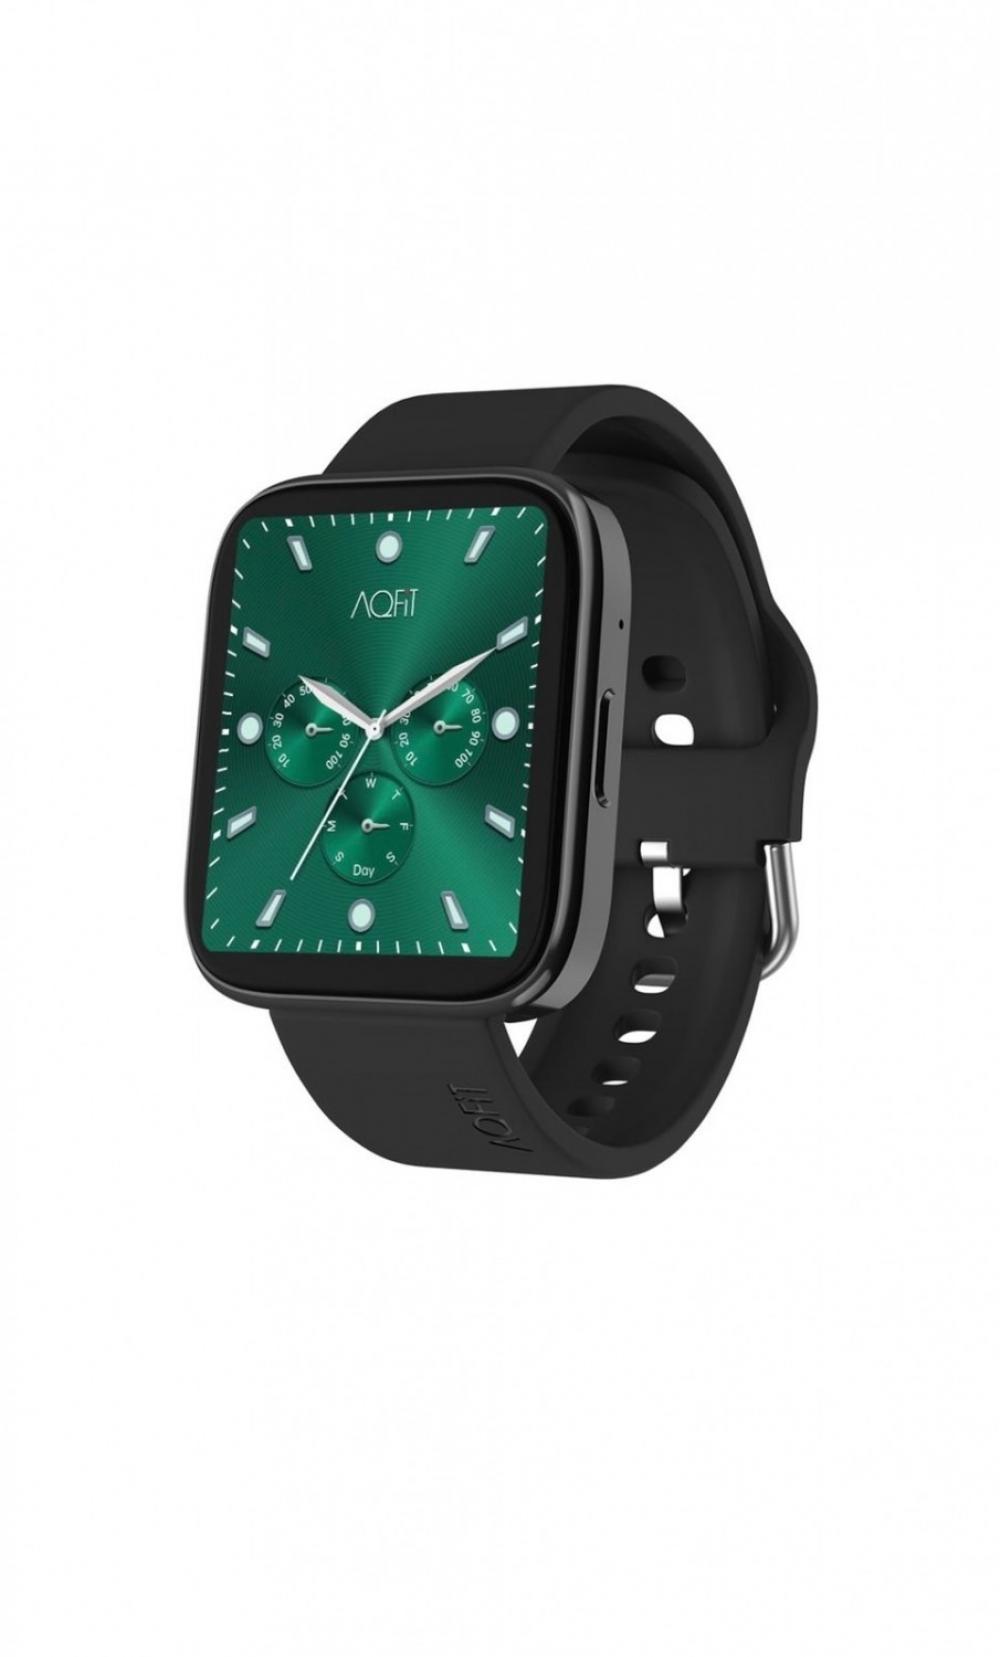 The Weekend Leader - AQFIT unveils affordable smartwatch 'W9 QUAD BT'